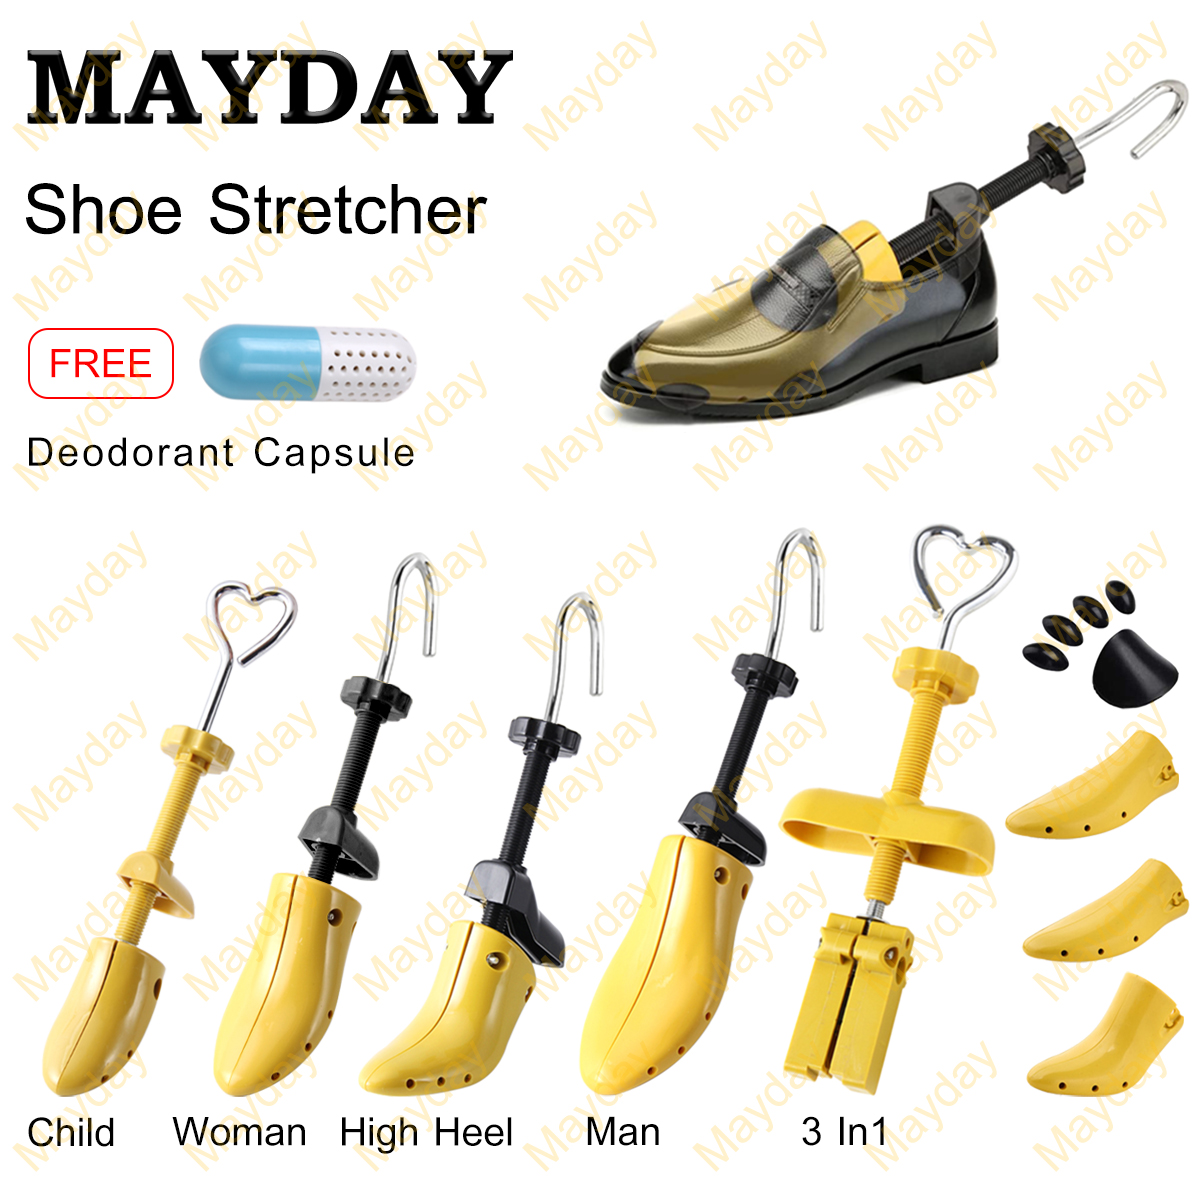 MAYDAY ปรับเครื่องยืดรองเท้า เท้ารองเท้าต้นไม้ความยาวความกว้างเปล ดันทรงรองเท้า ปรับขนาดได้ อุปกรณ์ดันทรงรองเท้า ดันทรงรองเท้า Shoe Stretcher[In Stock&Fast Shipping]